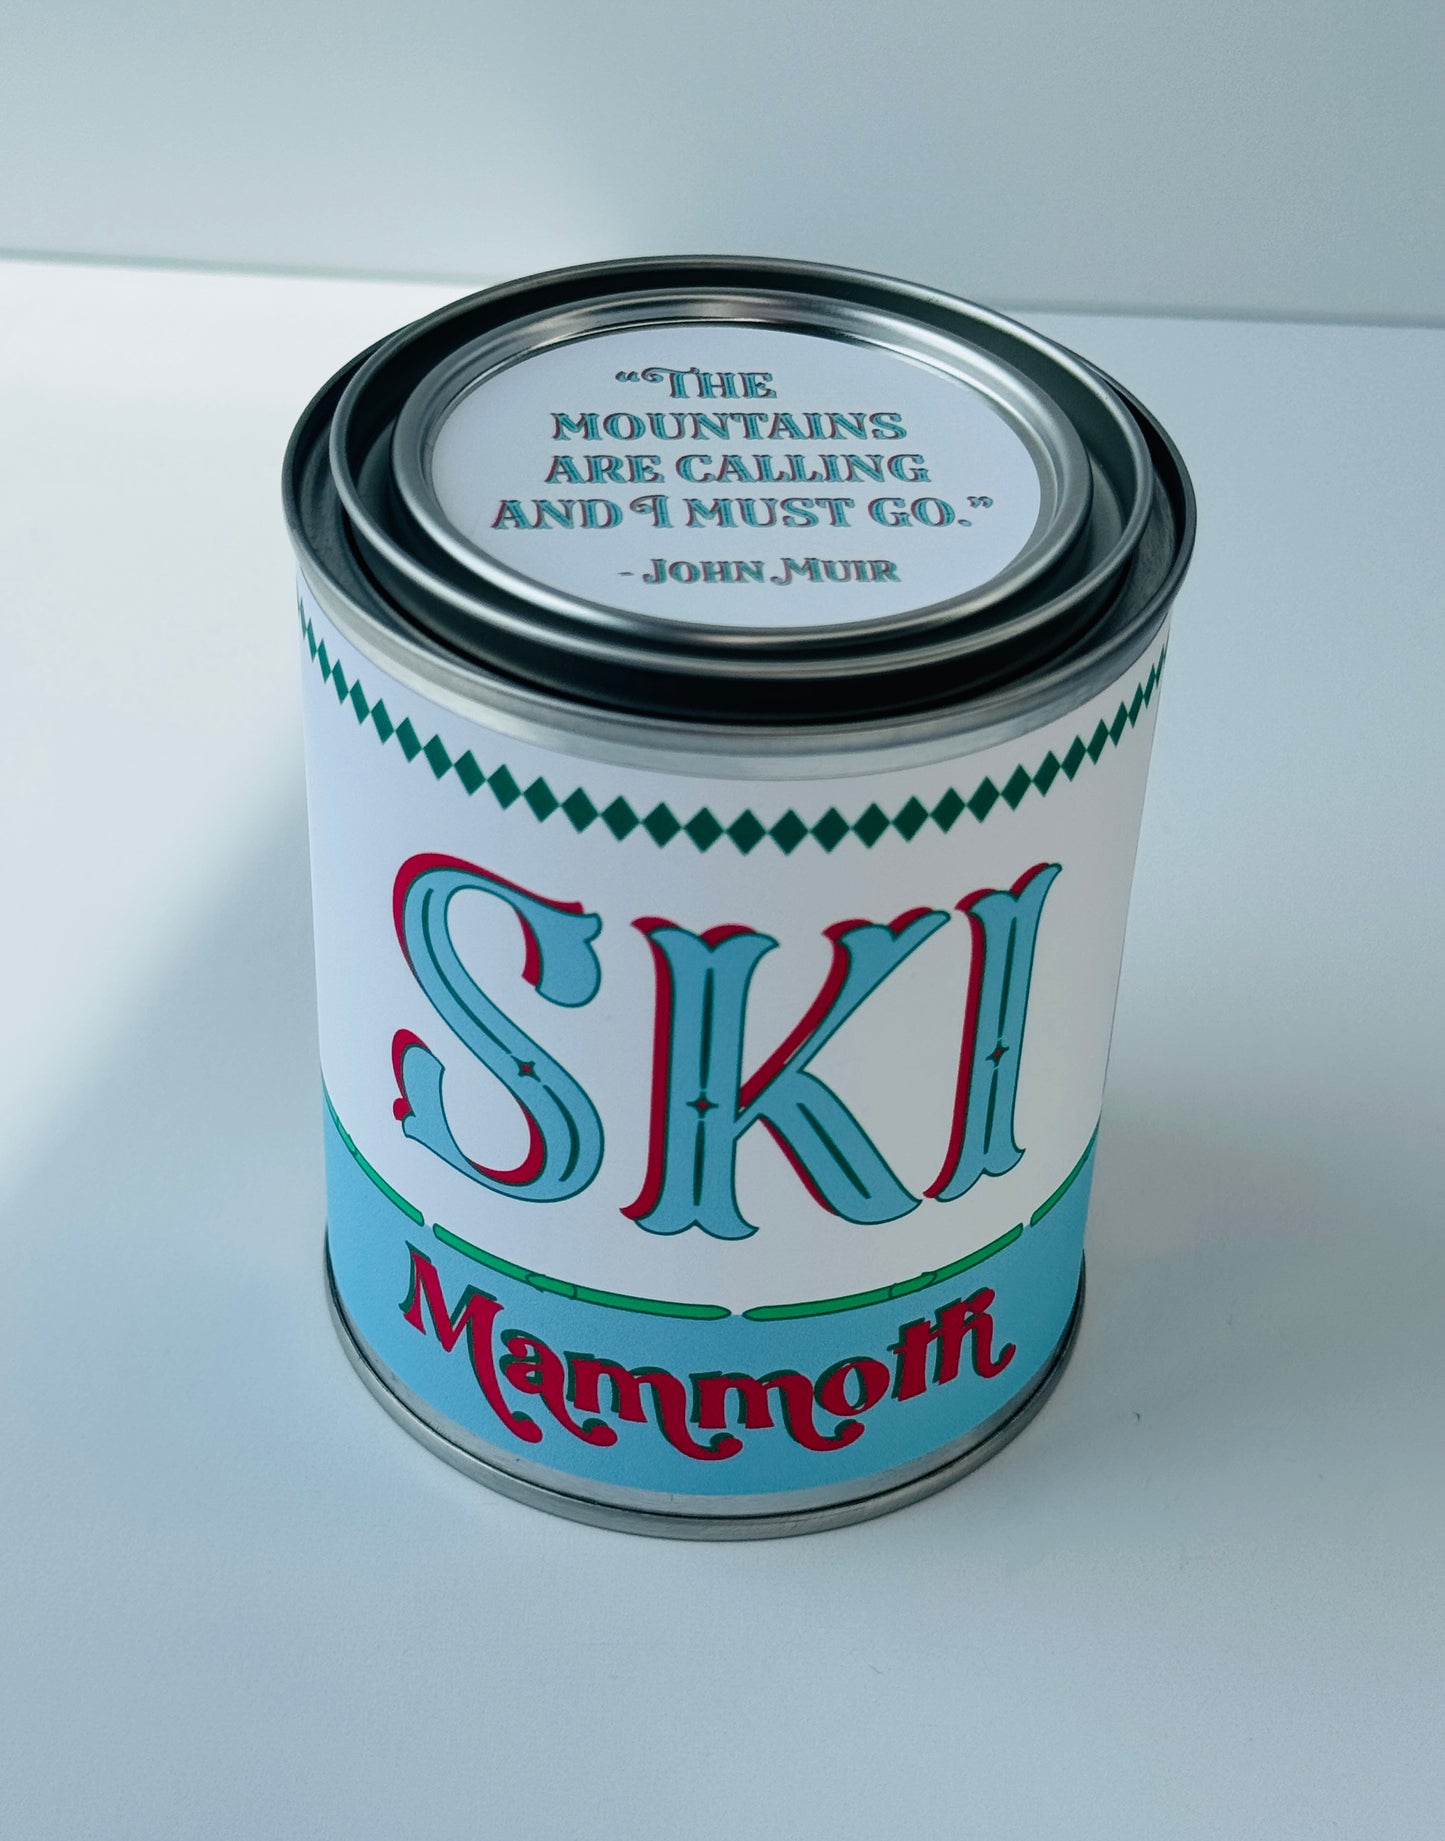 Ski Mammoth - Paint Tin Candle